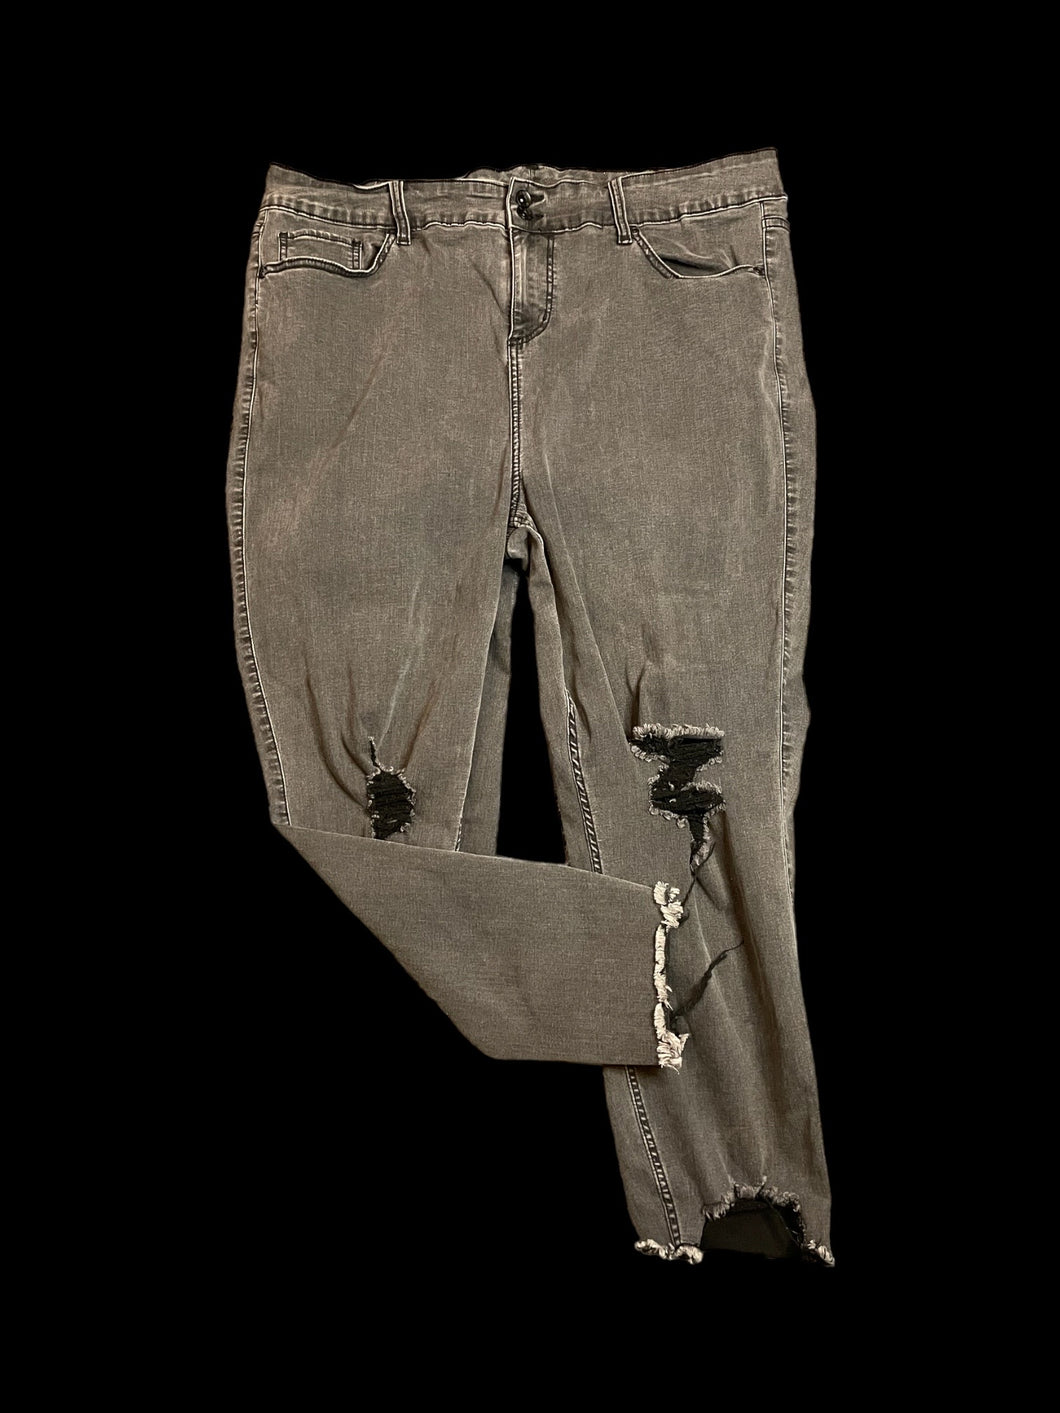 XL Dark grey cotton blend distressed high waist taper leg pants w/ raw hems, pockets, belt loops, two button/zipper closure